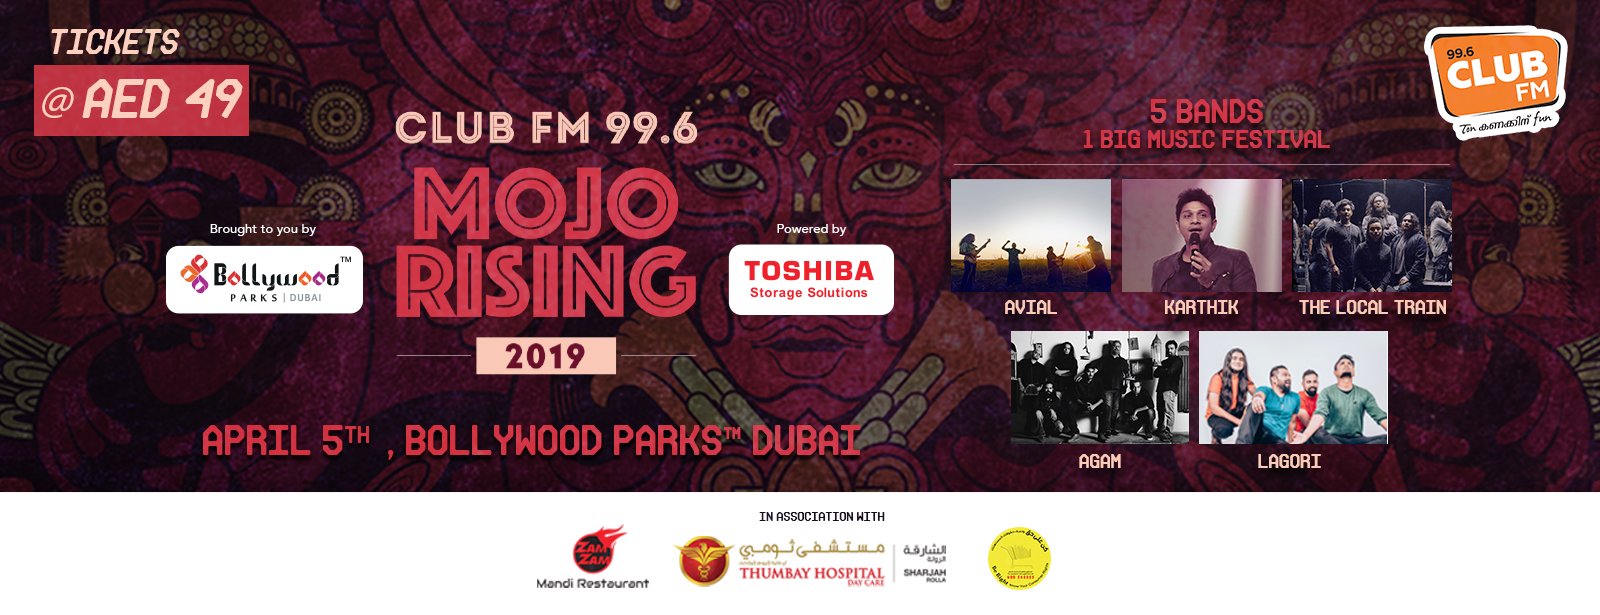 Mojo Rising Musical Festival - Coming Soon in UAE